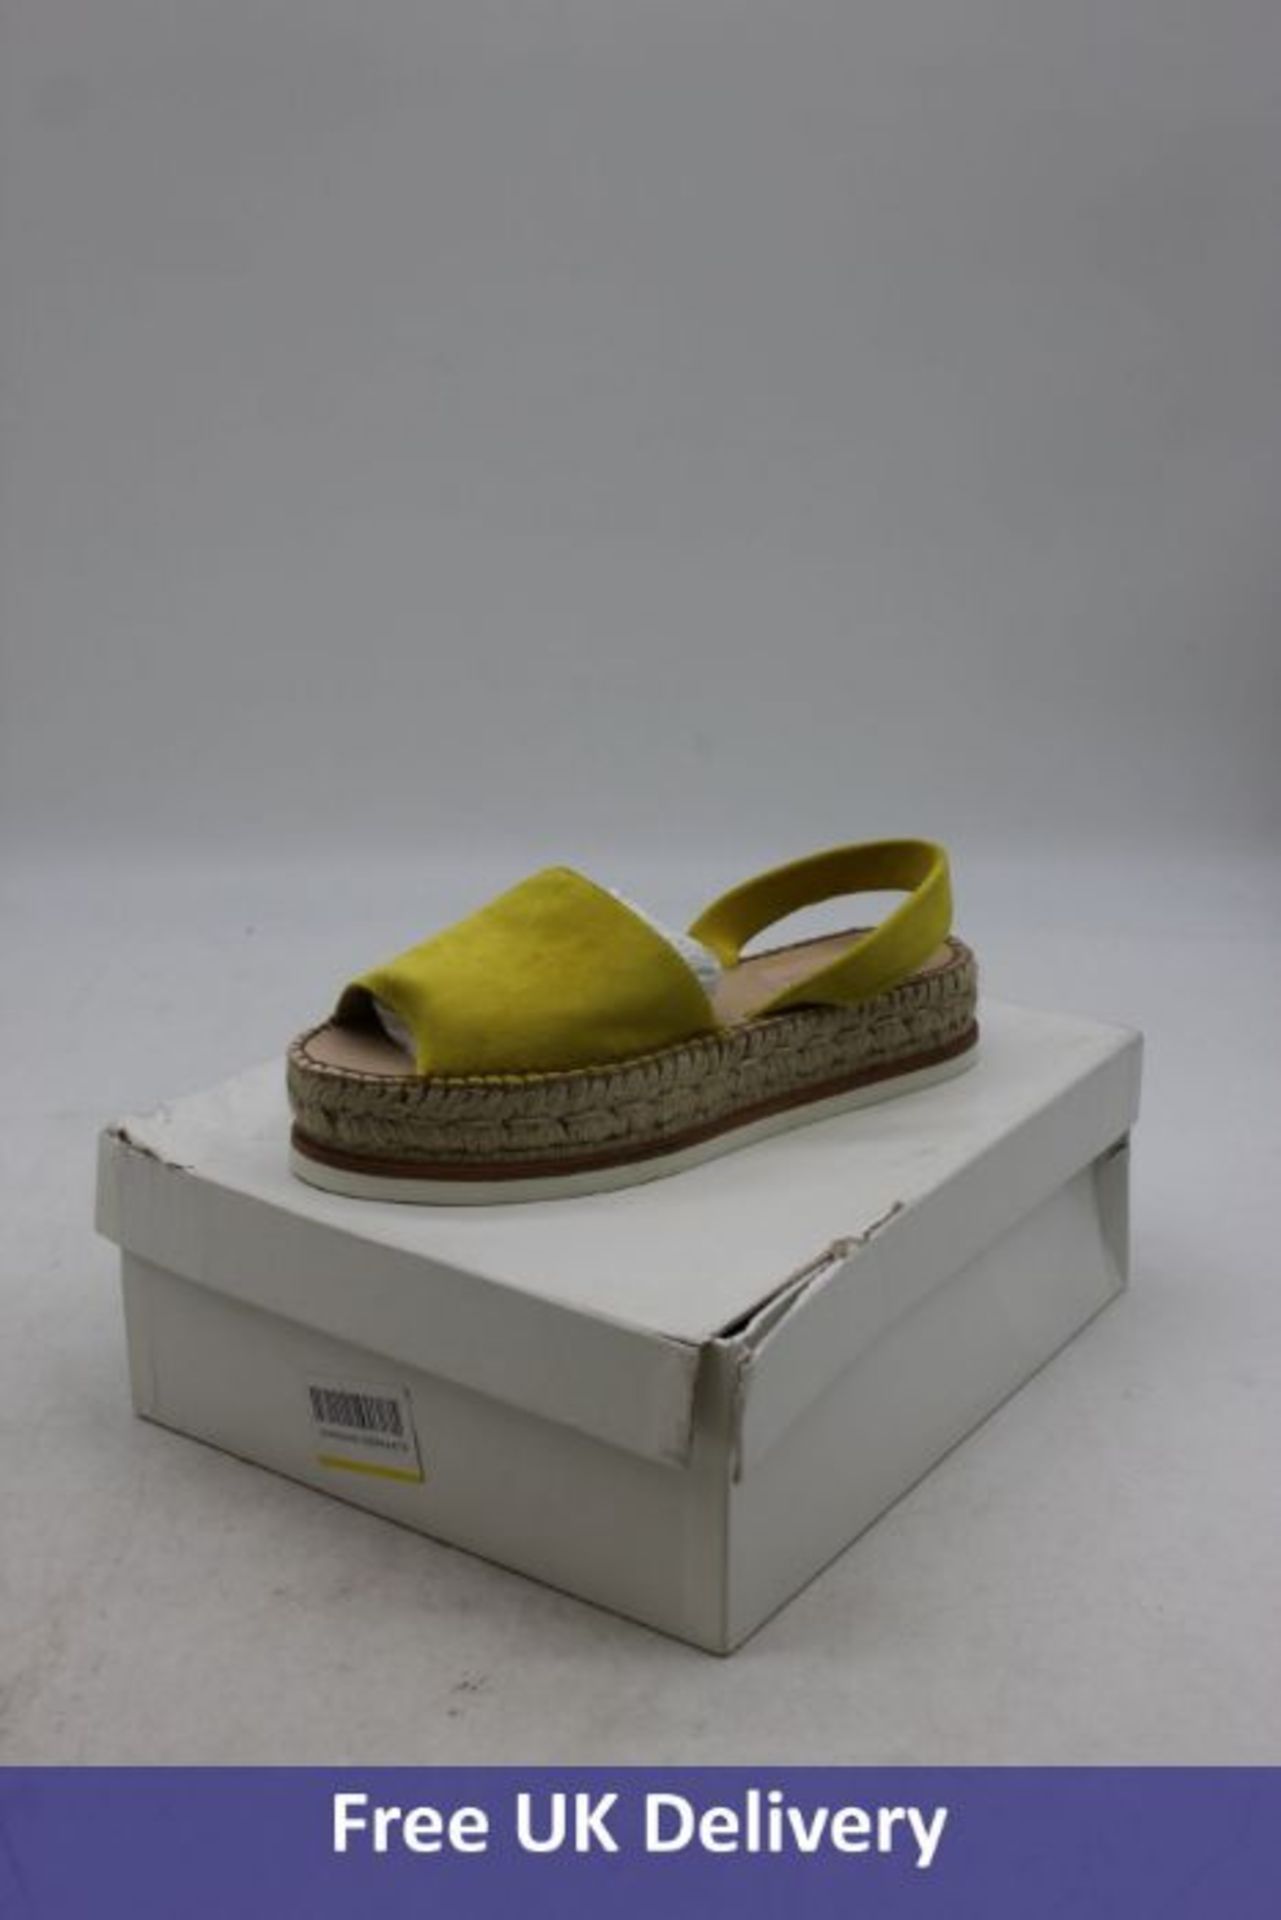 Gaimo Sandals, Yellow, EU 38. Box damaged